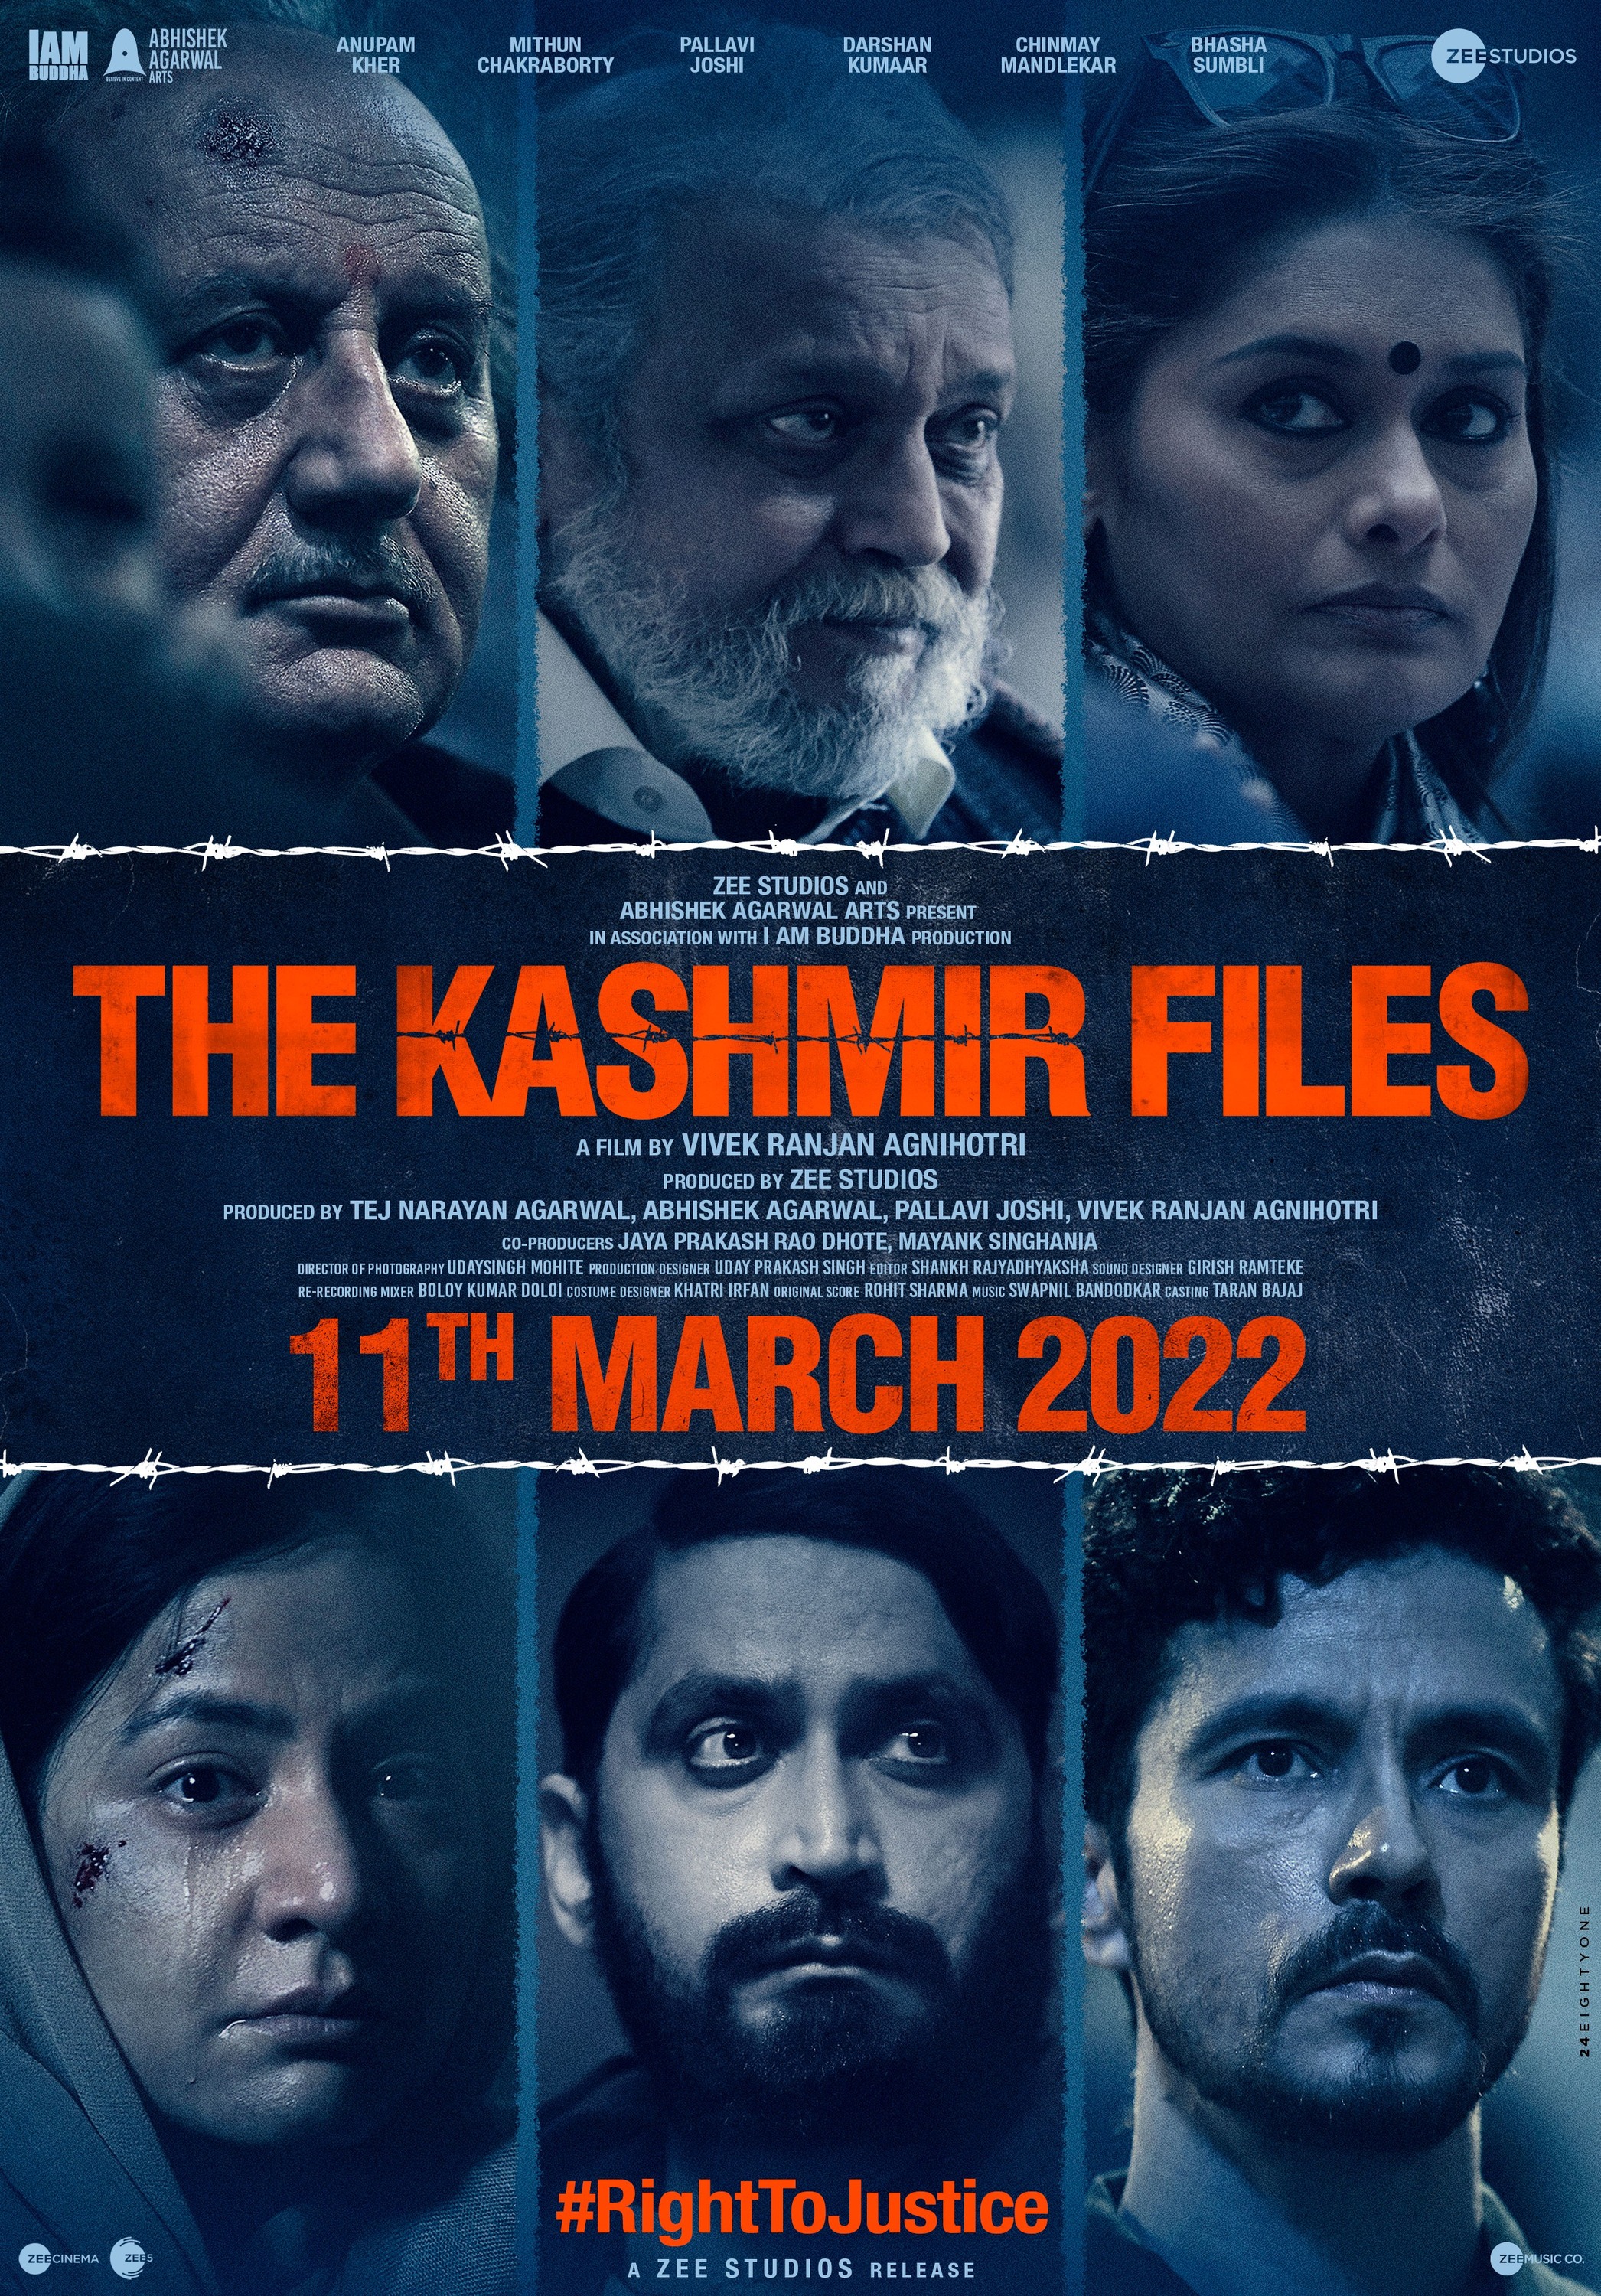 Mega Sized Movie Poster Image for The Kashmir Files 